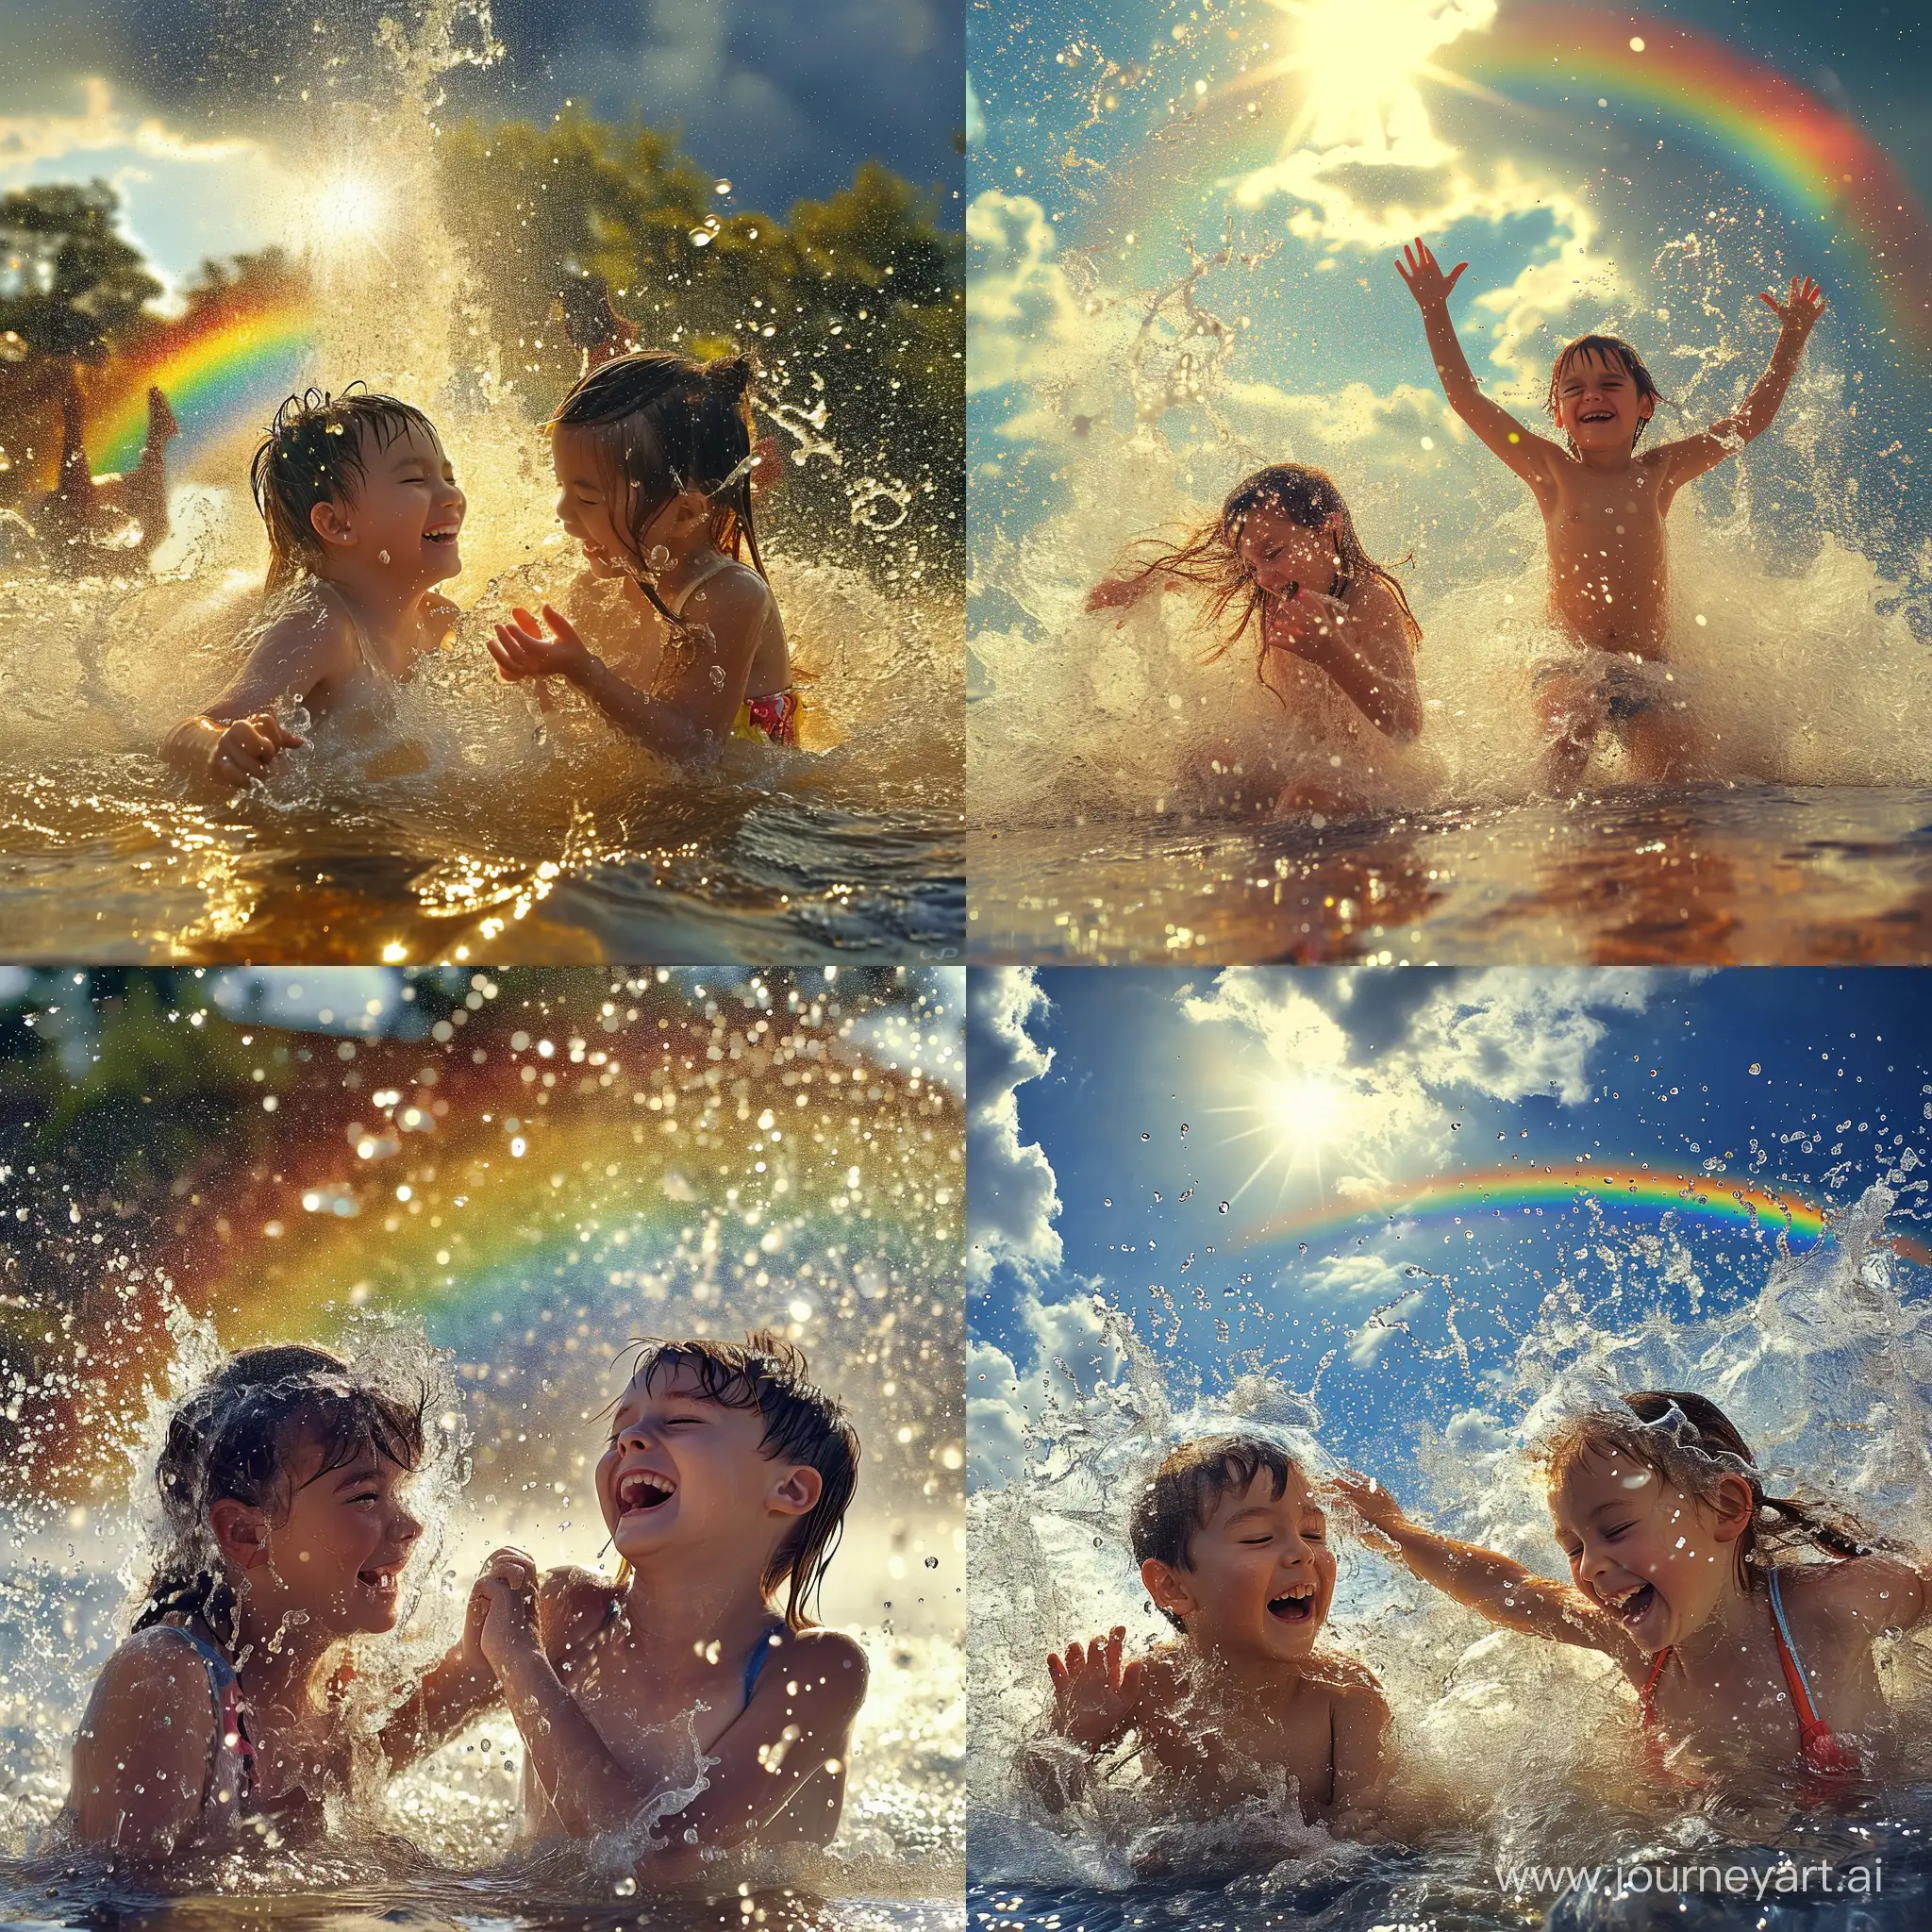 Joyful-Kids-Playing-in-Summer-Rain-with-Rainbow